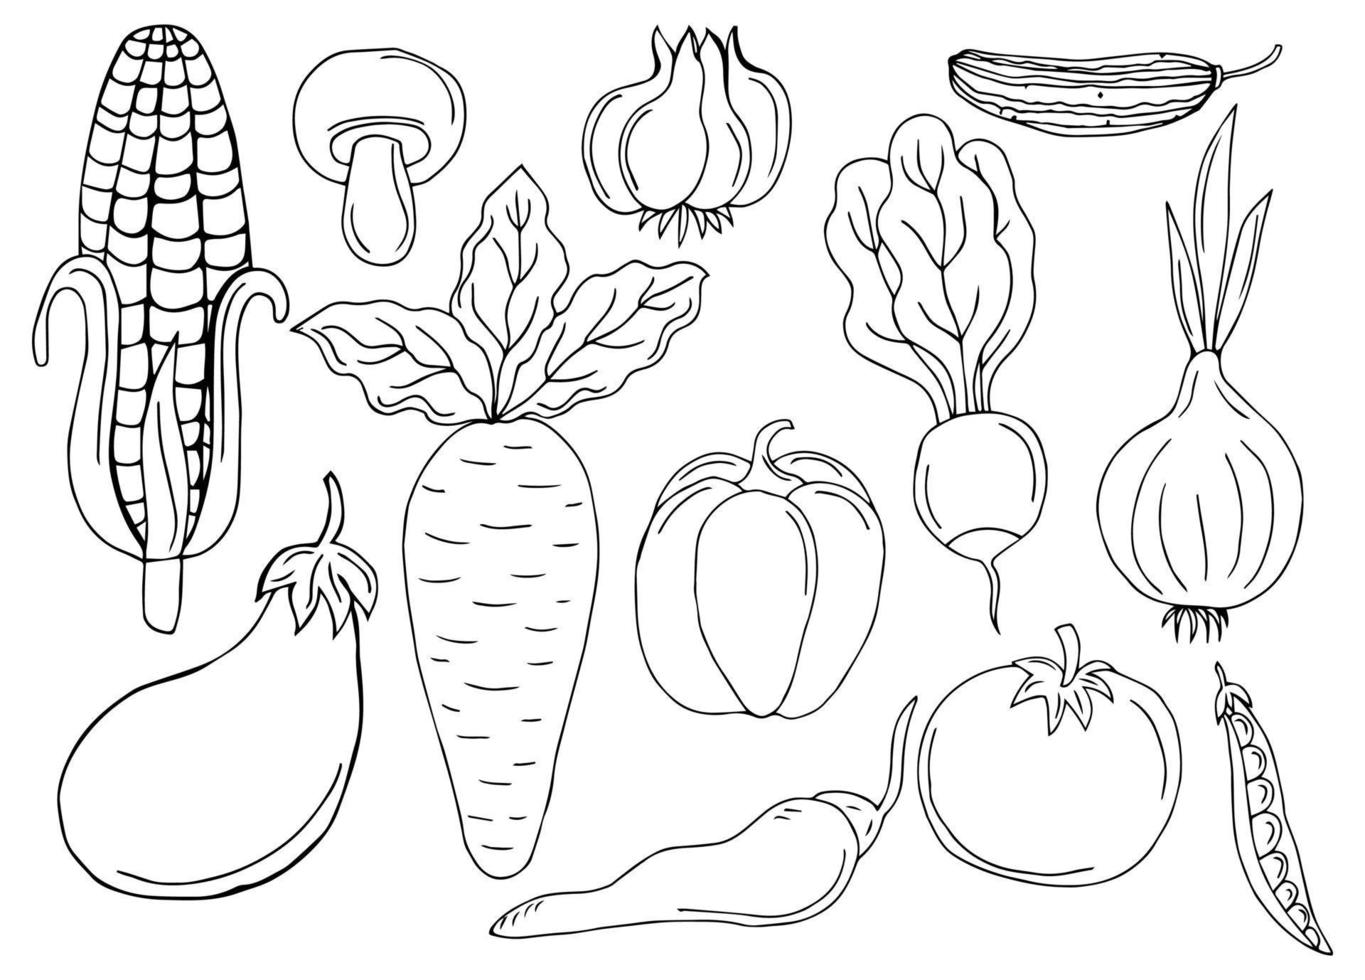 Sketch vegetable icon set vector illustration. Black line contour sketch vegetables, tomato and onion, potato and pepper doodle icon on white background for restaurant menu vintage design